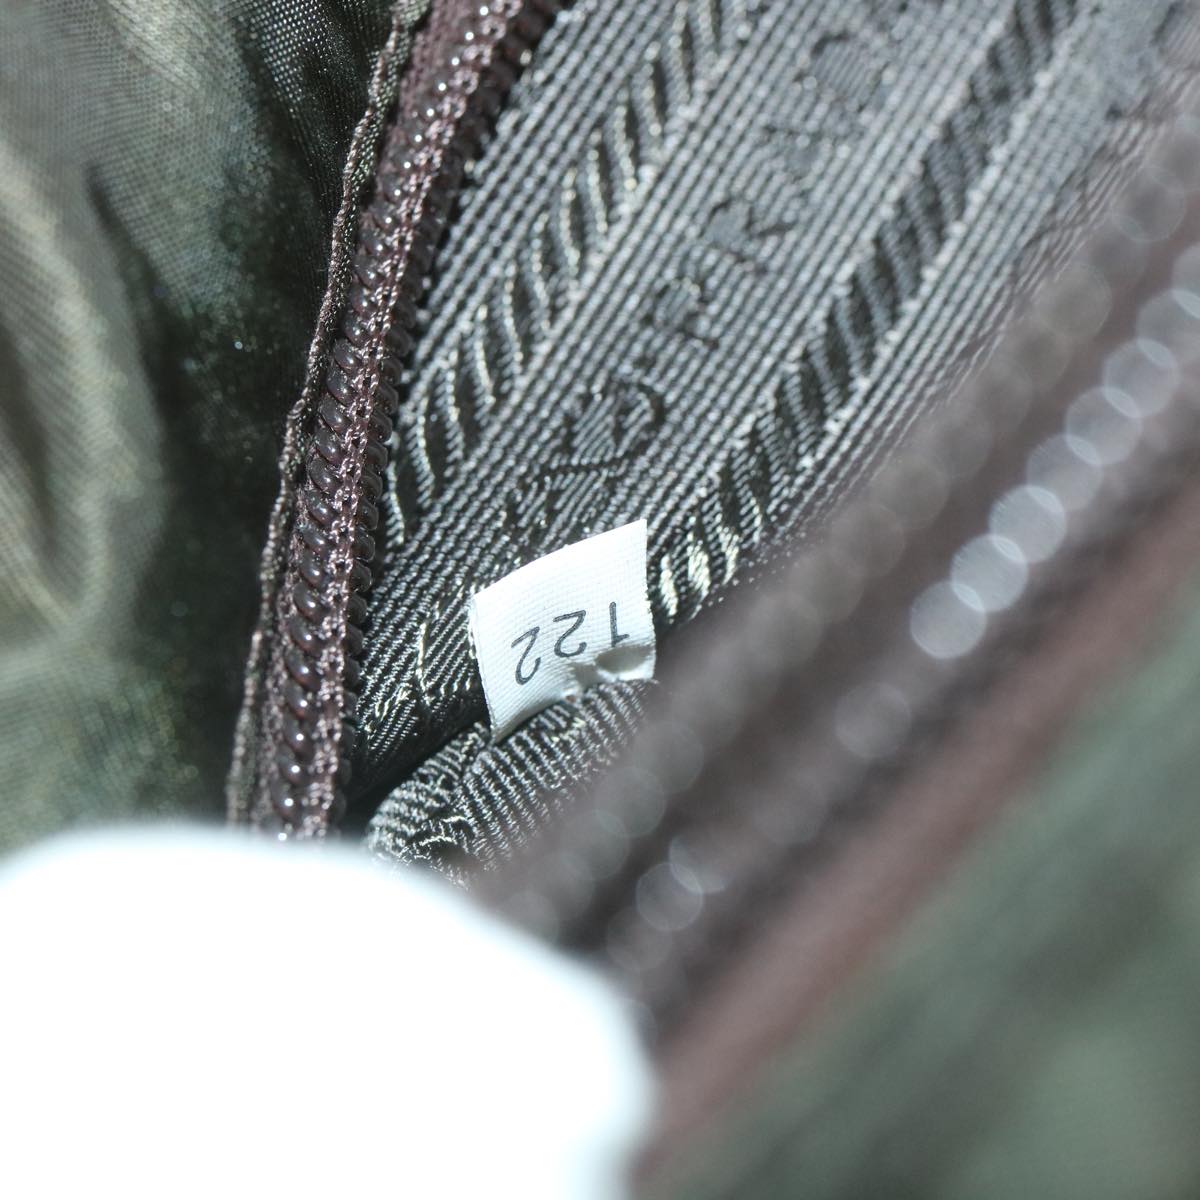 PRADA Shoulder Bag Nylon Leather Khaki Auth 58683